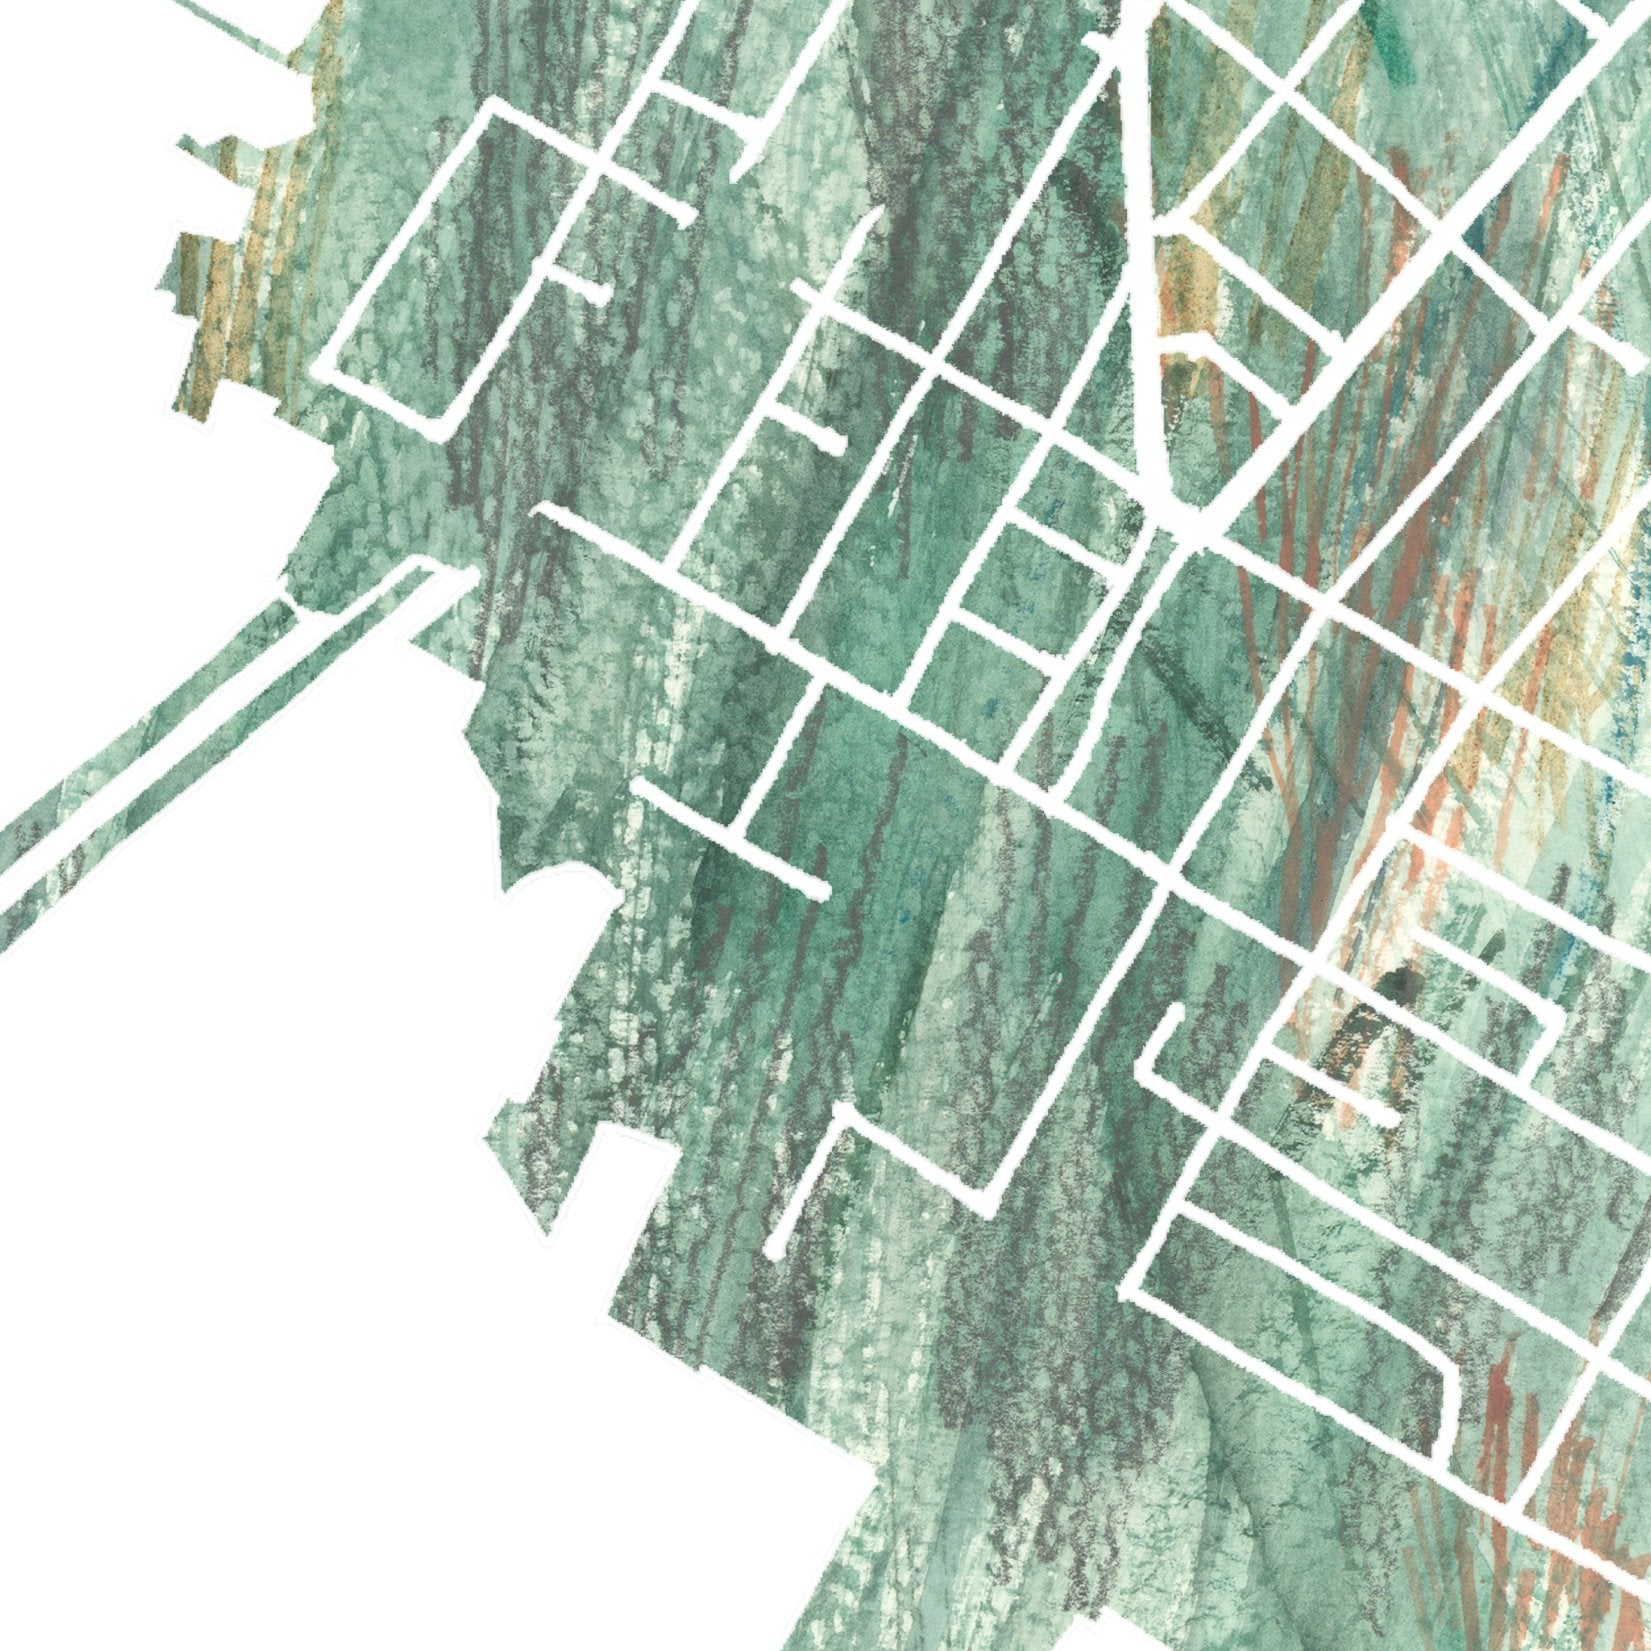 BOSTON Urban Fabrics City Map: PRINT